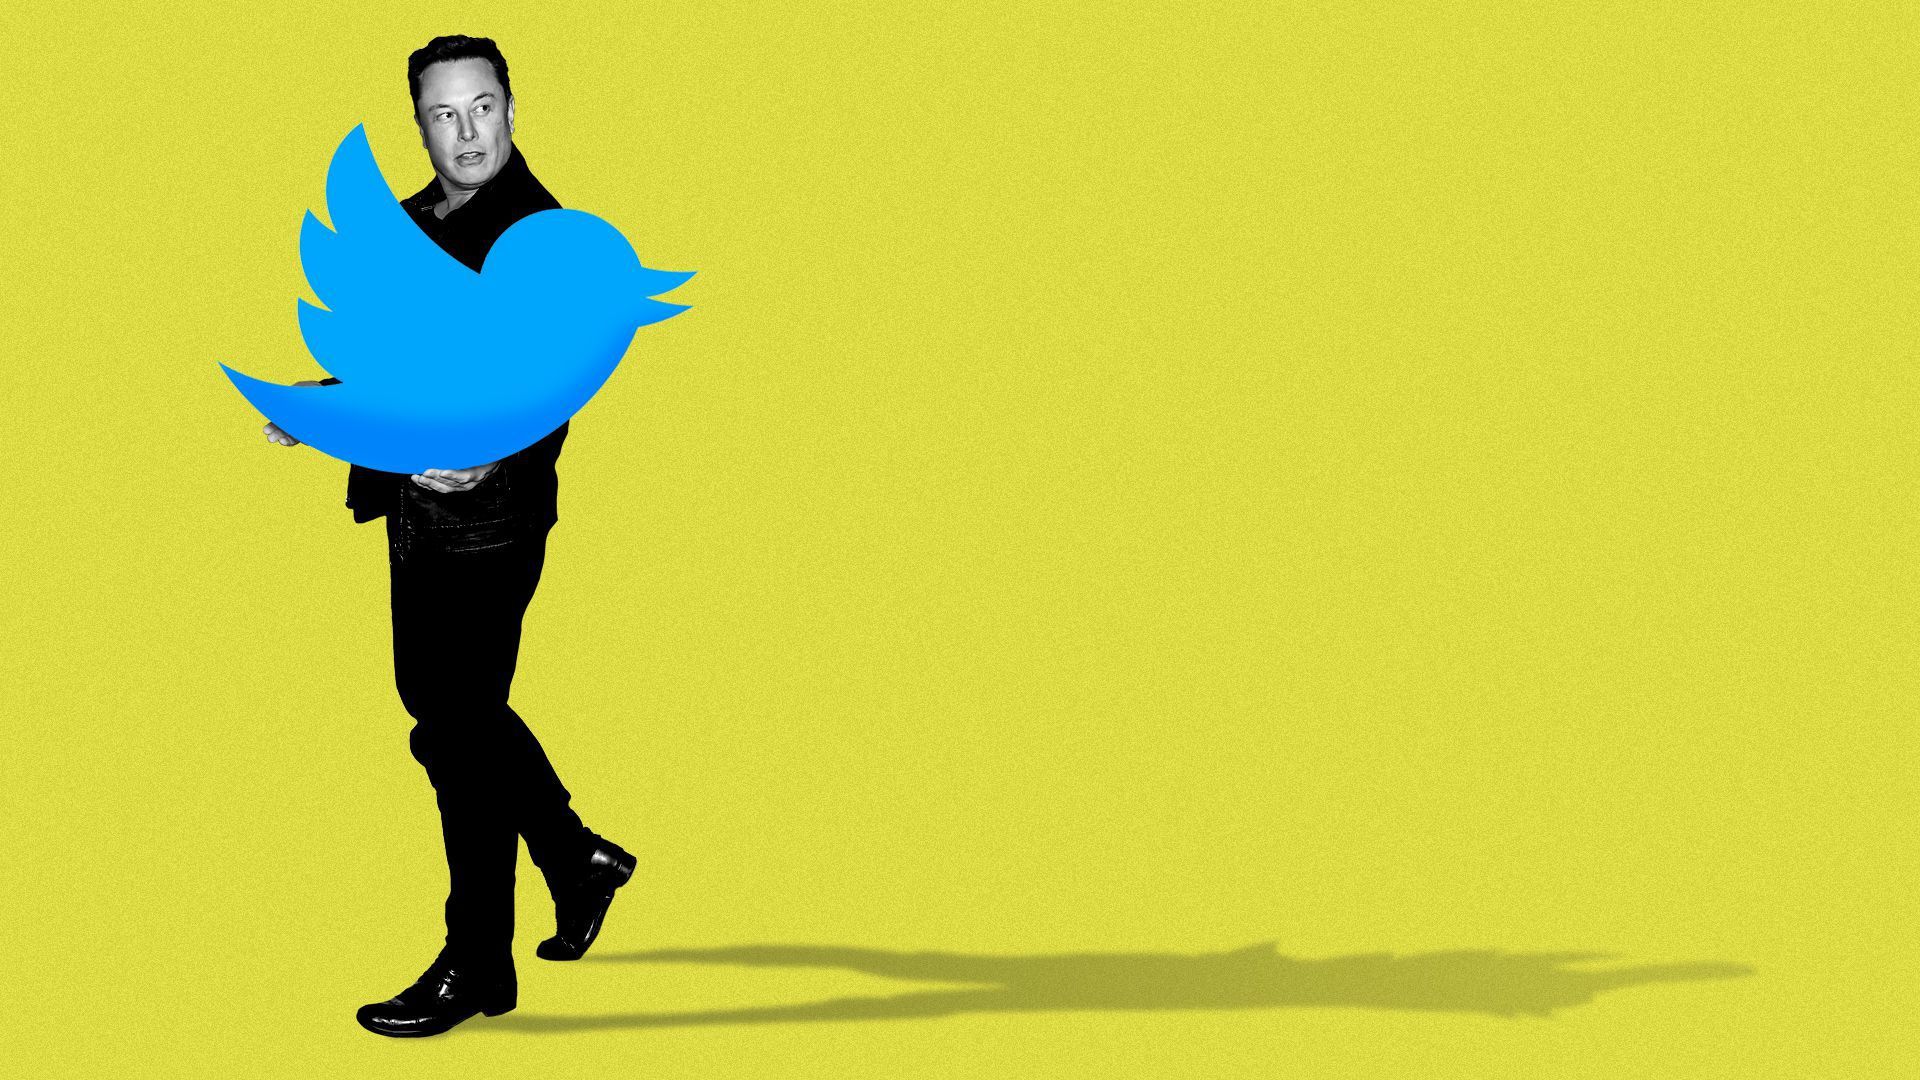 An illustration of Elon Musk holding the Twitter bird